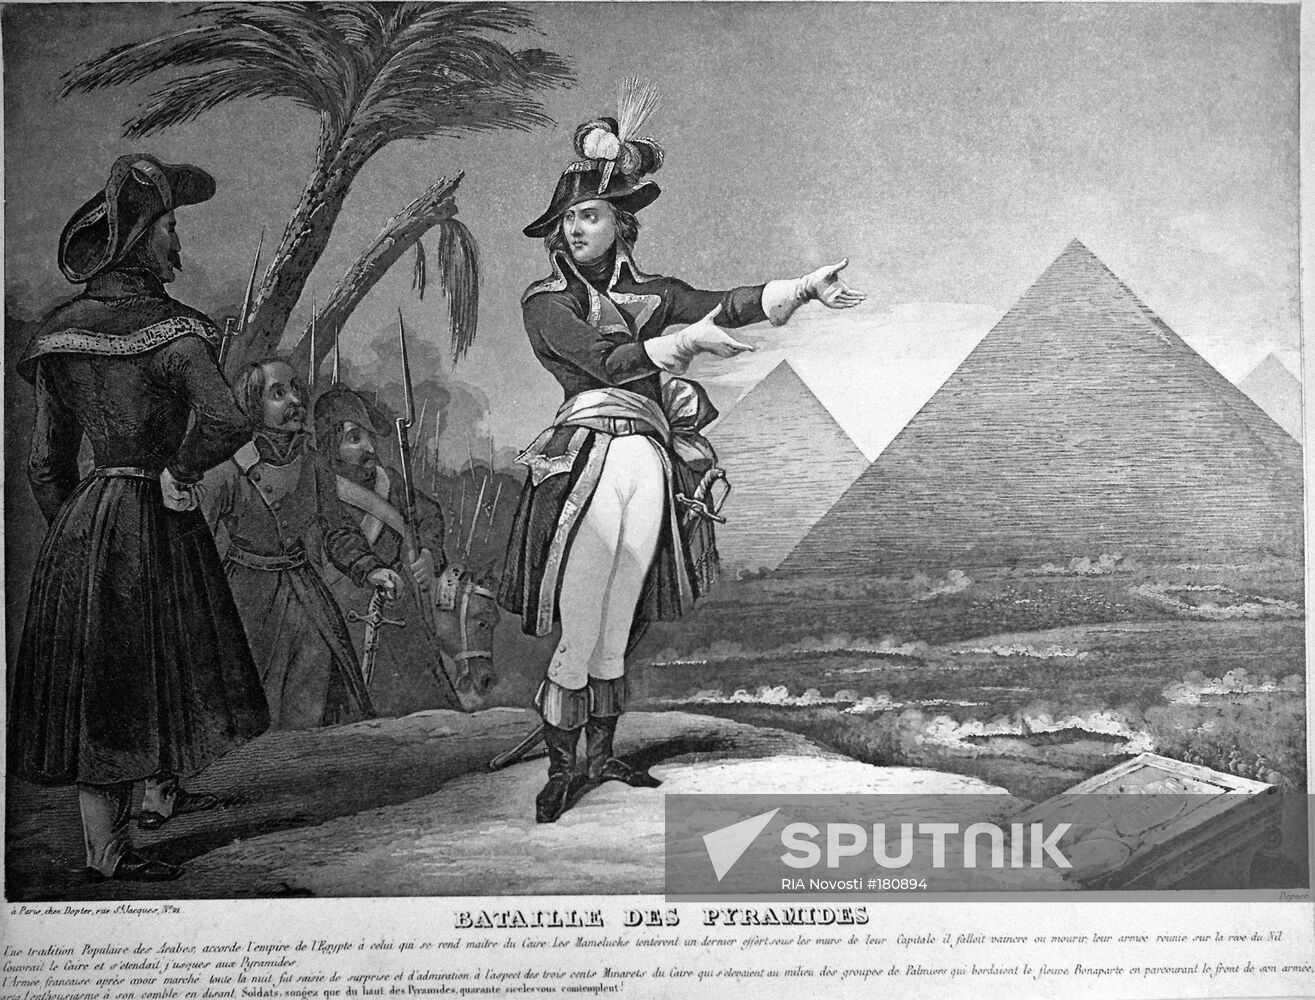 Napoleon in Egypt, pyrmids, battle